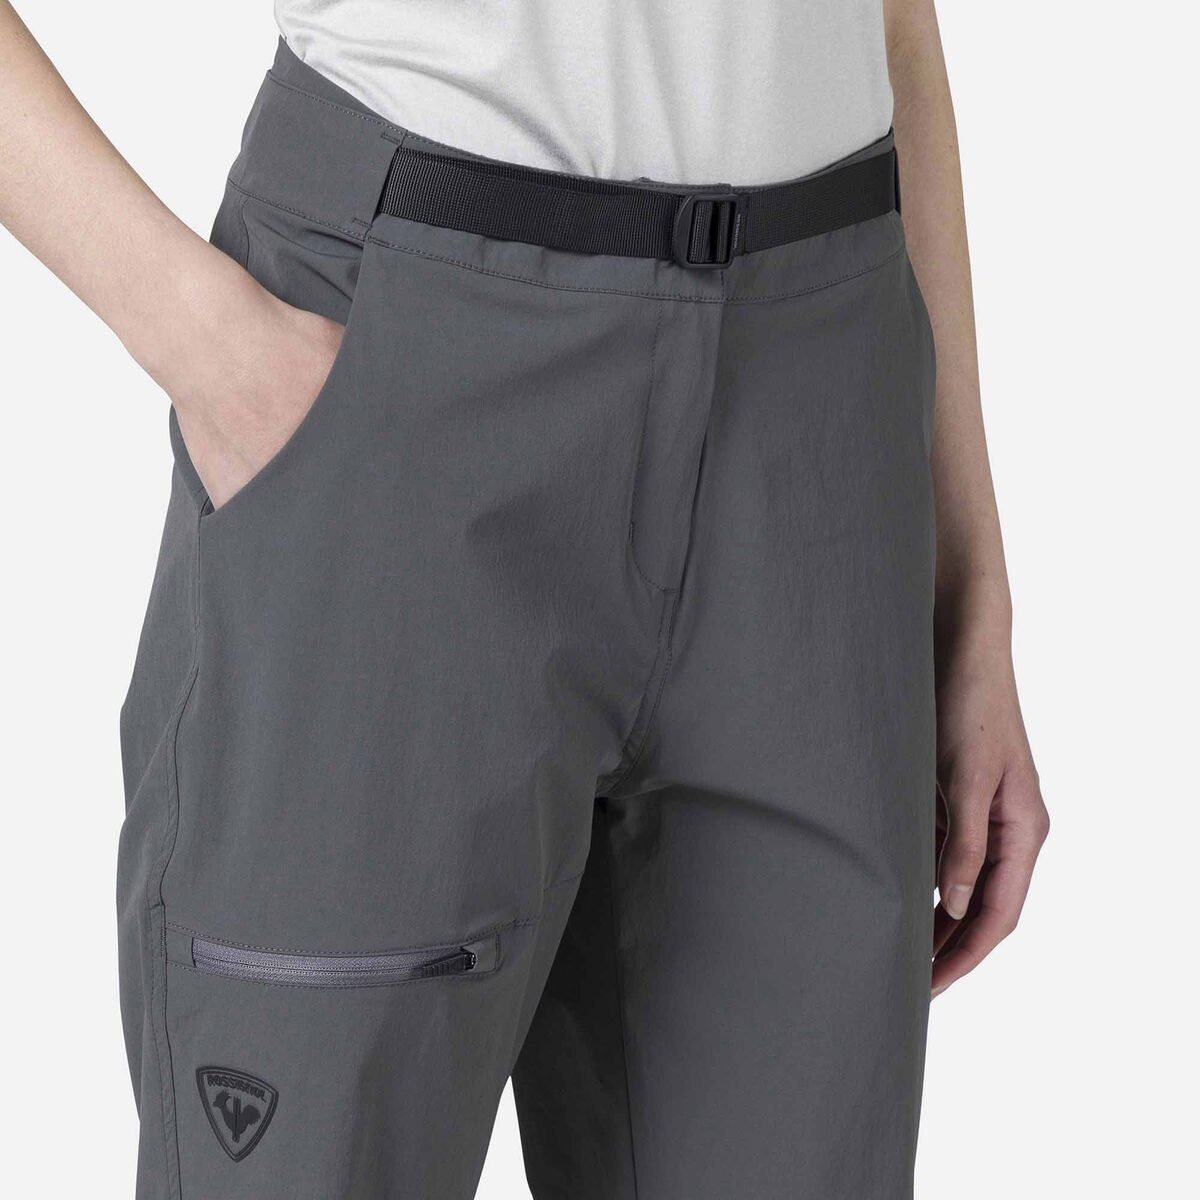 Rossignol Women's SKPR Hiking Pants grey